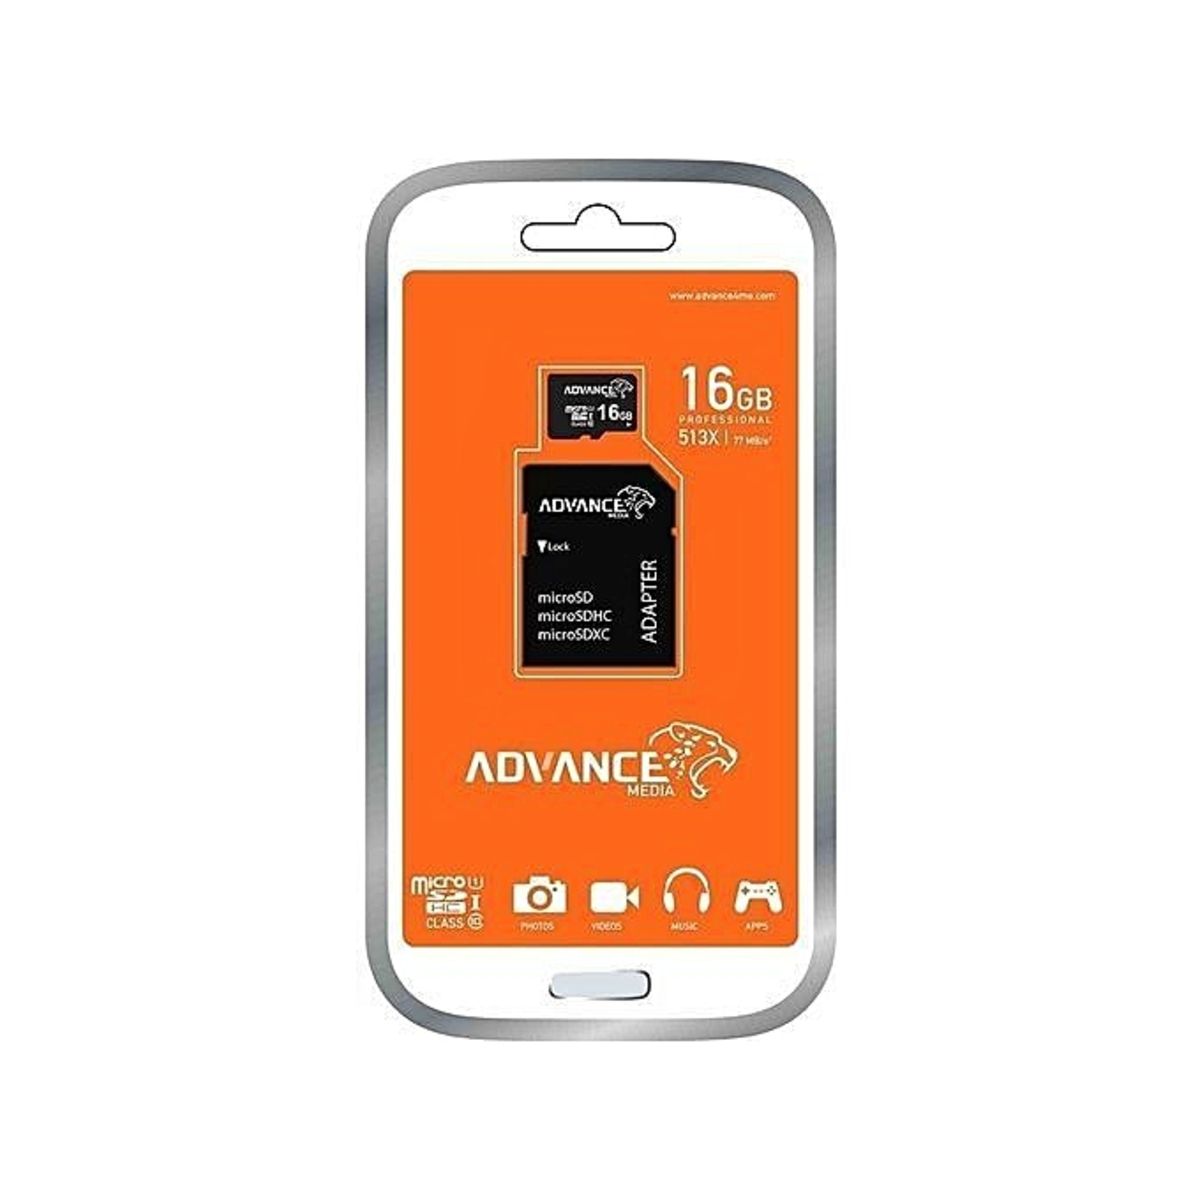 16GB Advance Memory Card